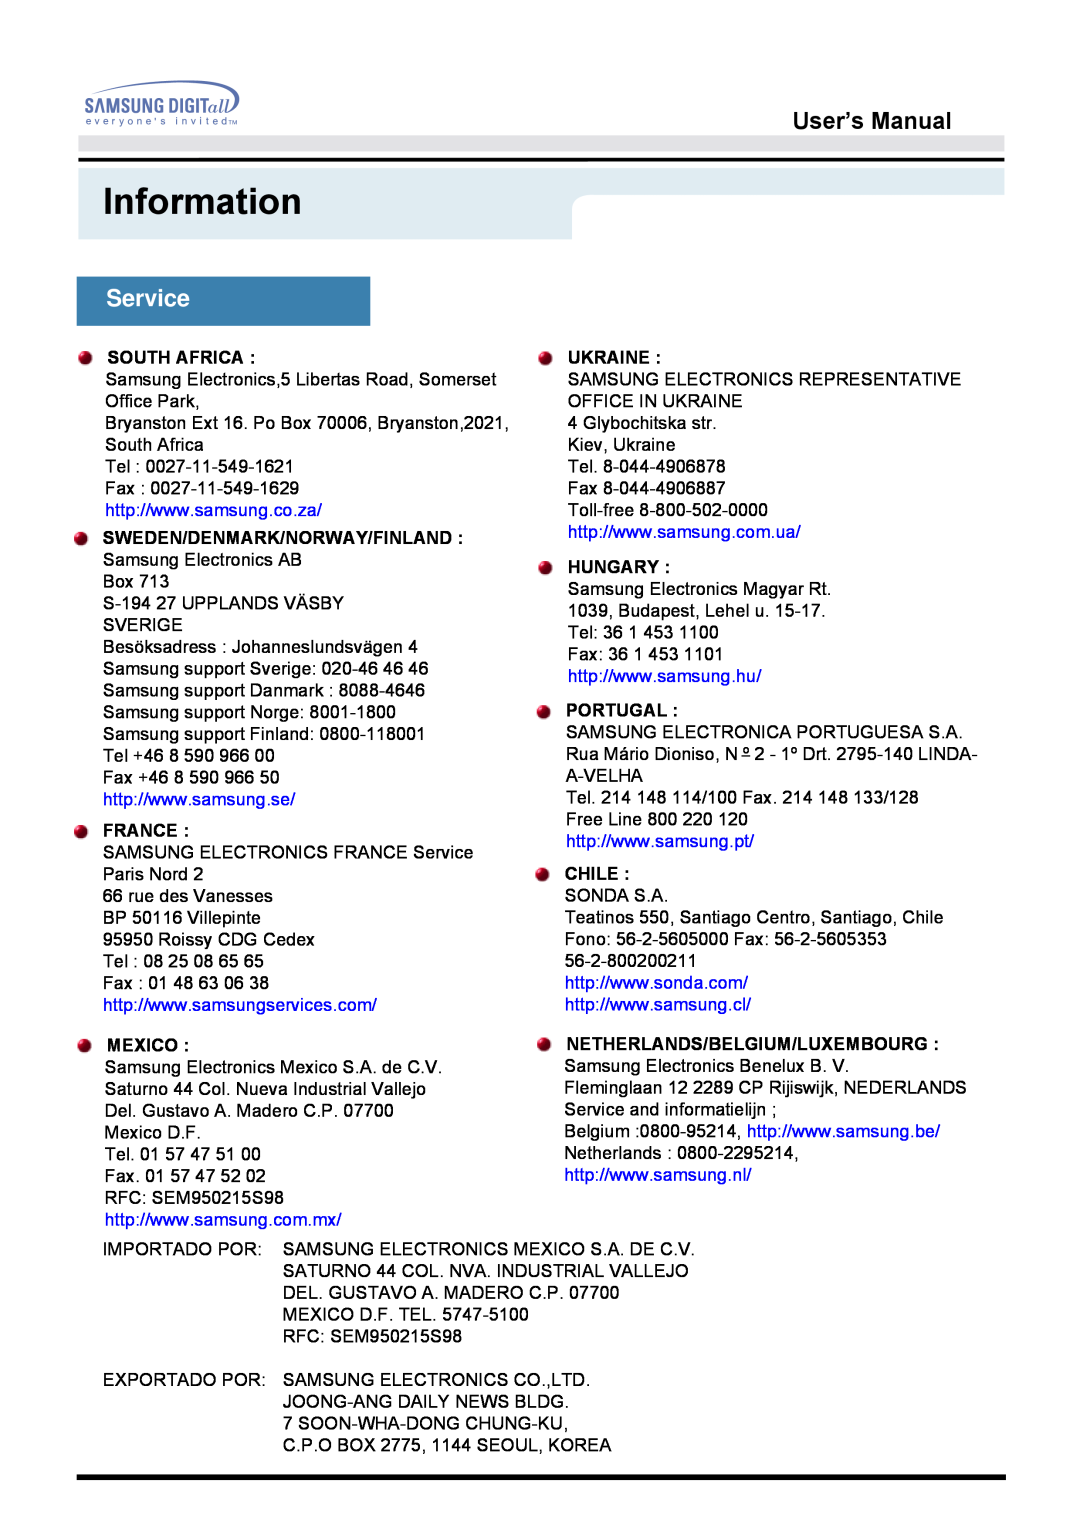 Samsung 192B Service, Information, User’s Manual, South Africa, Sweden/Denmark/Norway/Finland, France, Mexico, Ukraine 